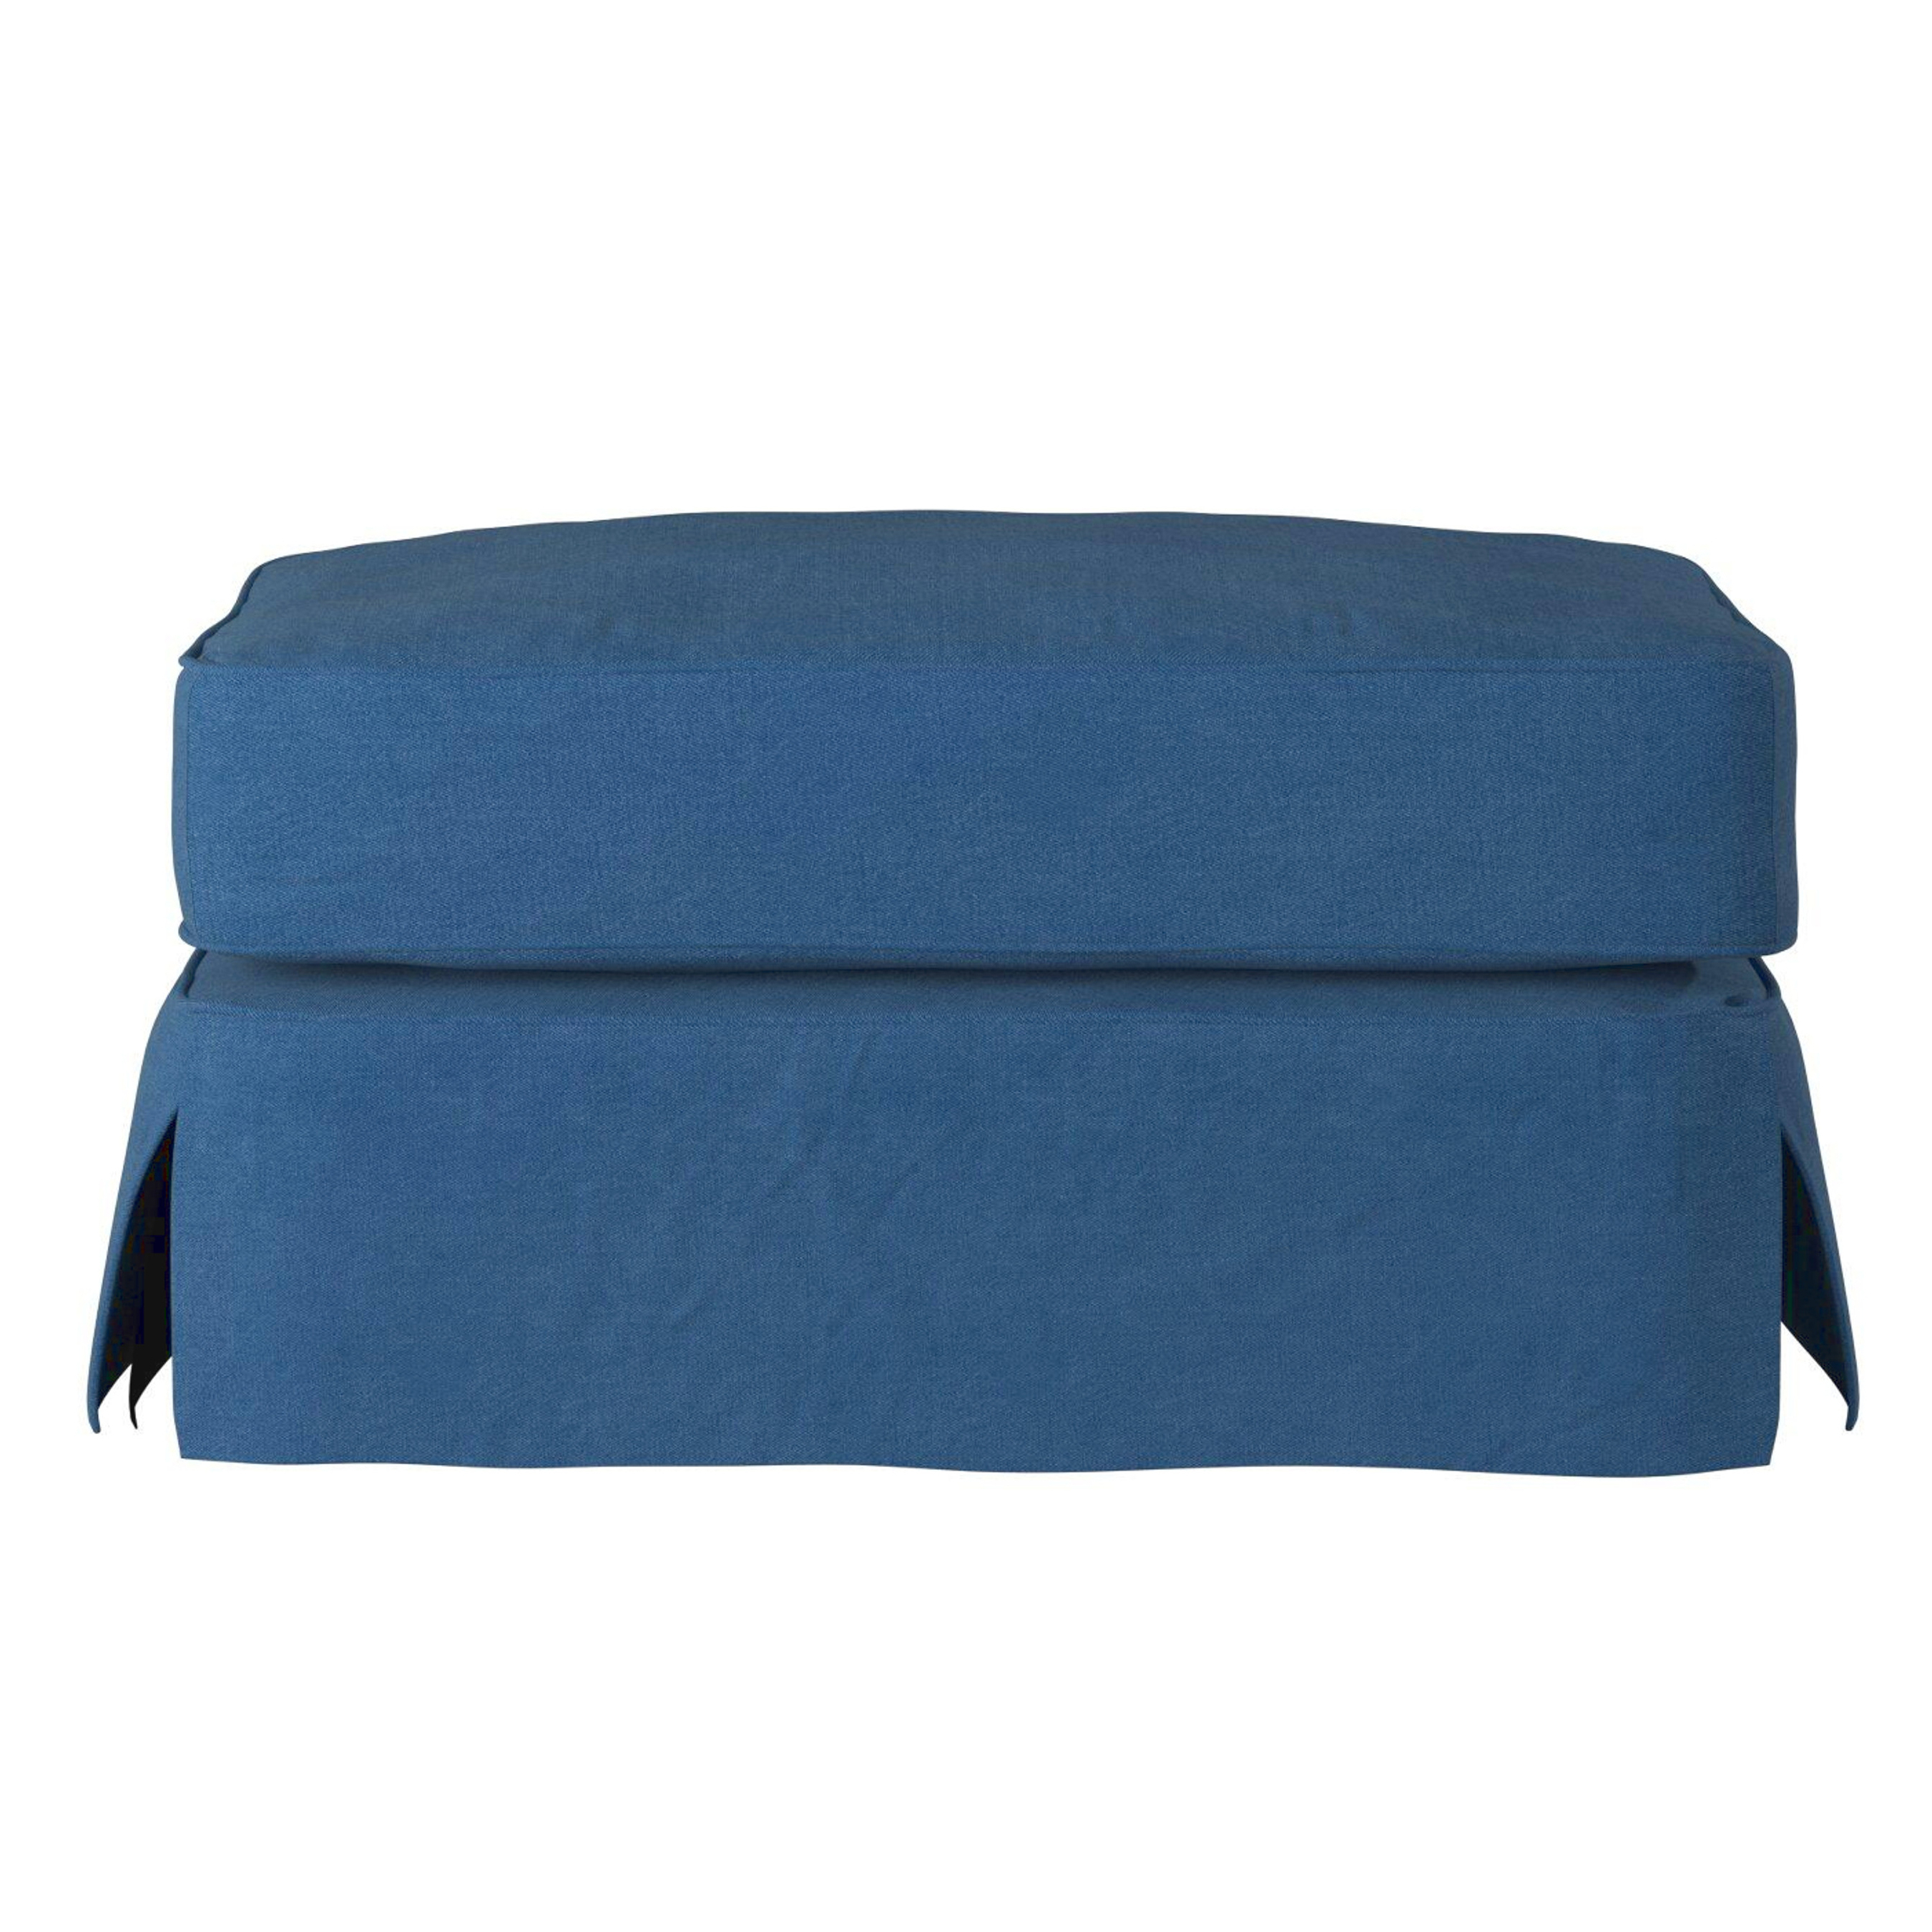 Besthom Americana Upholstered Pillow Top Ottoman - Indigo Blue